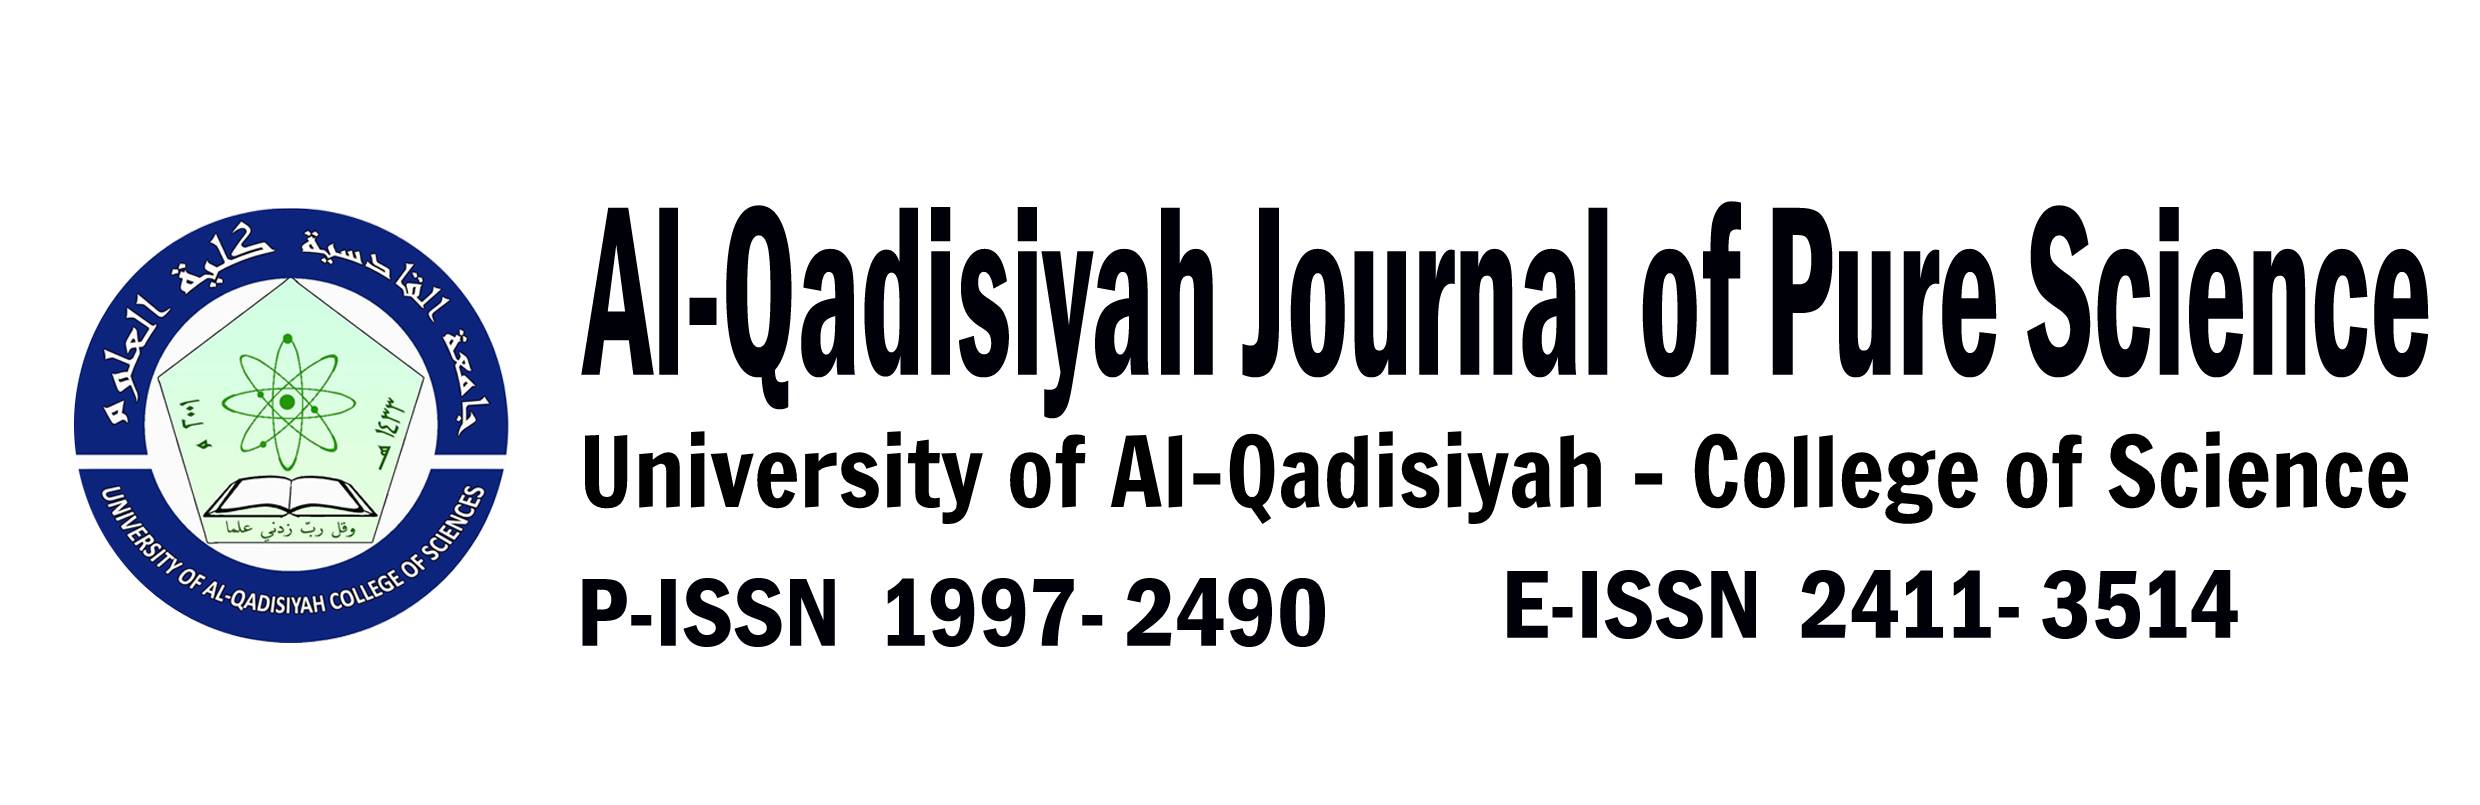 Al-Qadisiyah Journal Of Pure Science